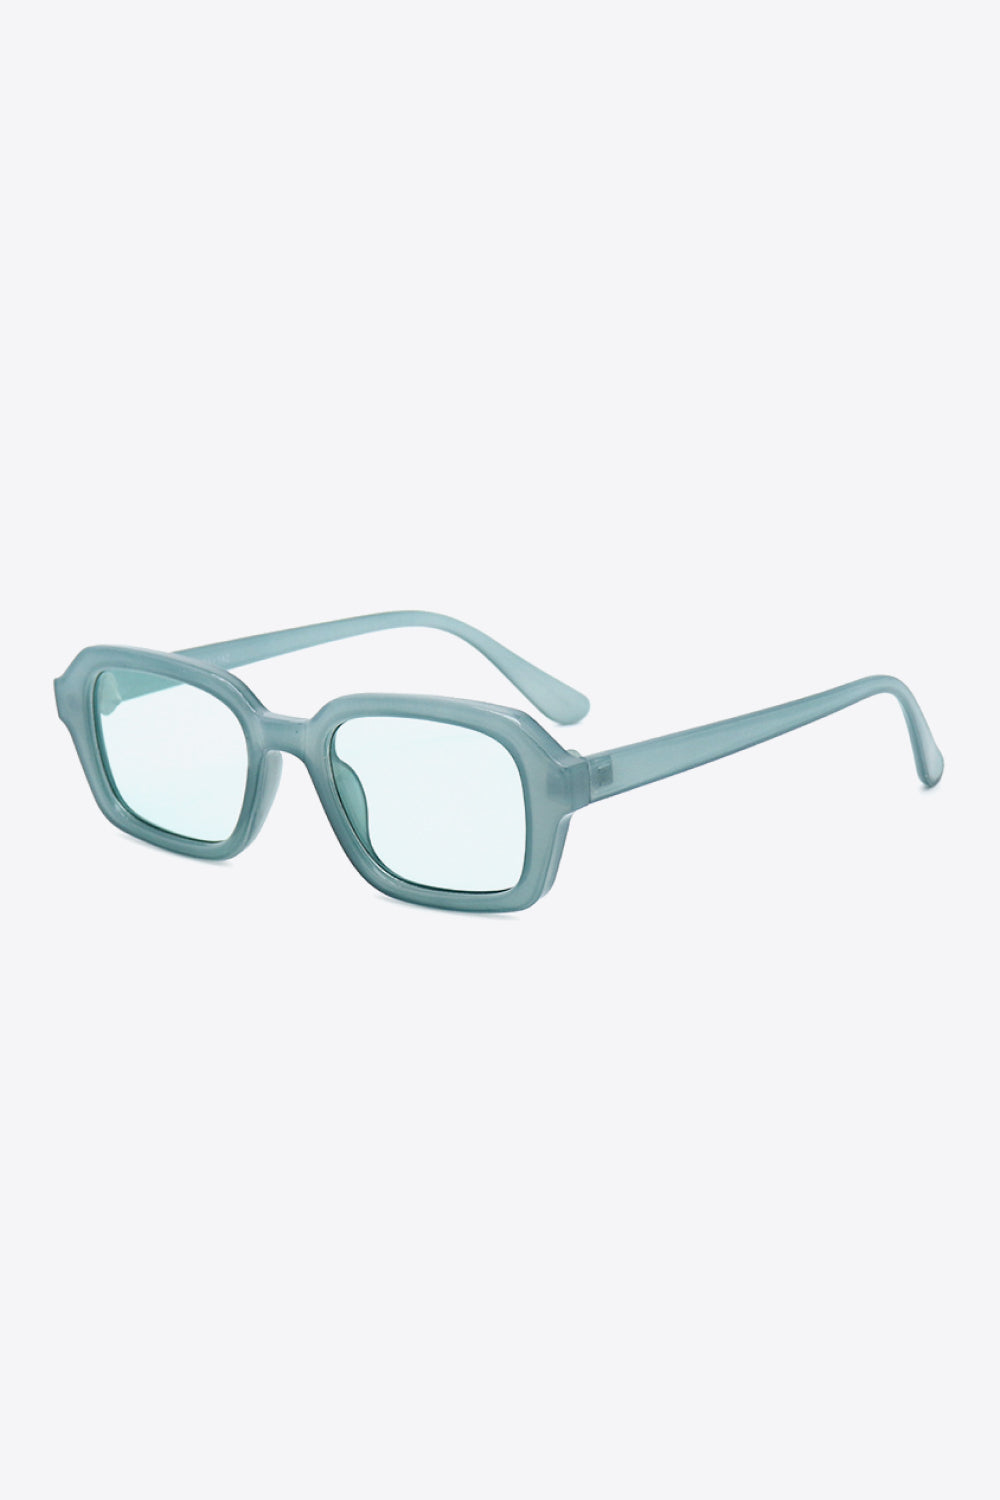 Rectangle Full Rim Sunglasses Pastel Blue One Size Sunglasses by Vim&Vigor | Vim&Vigor Boutique